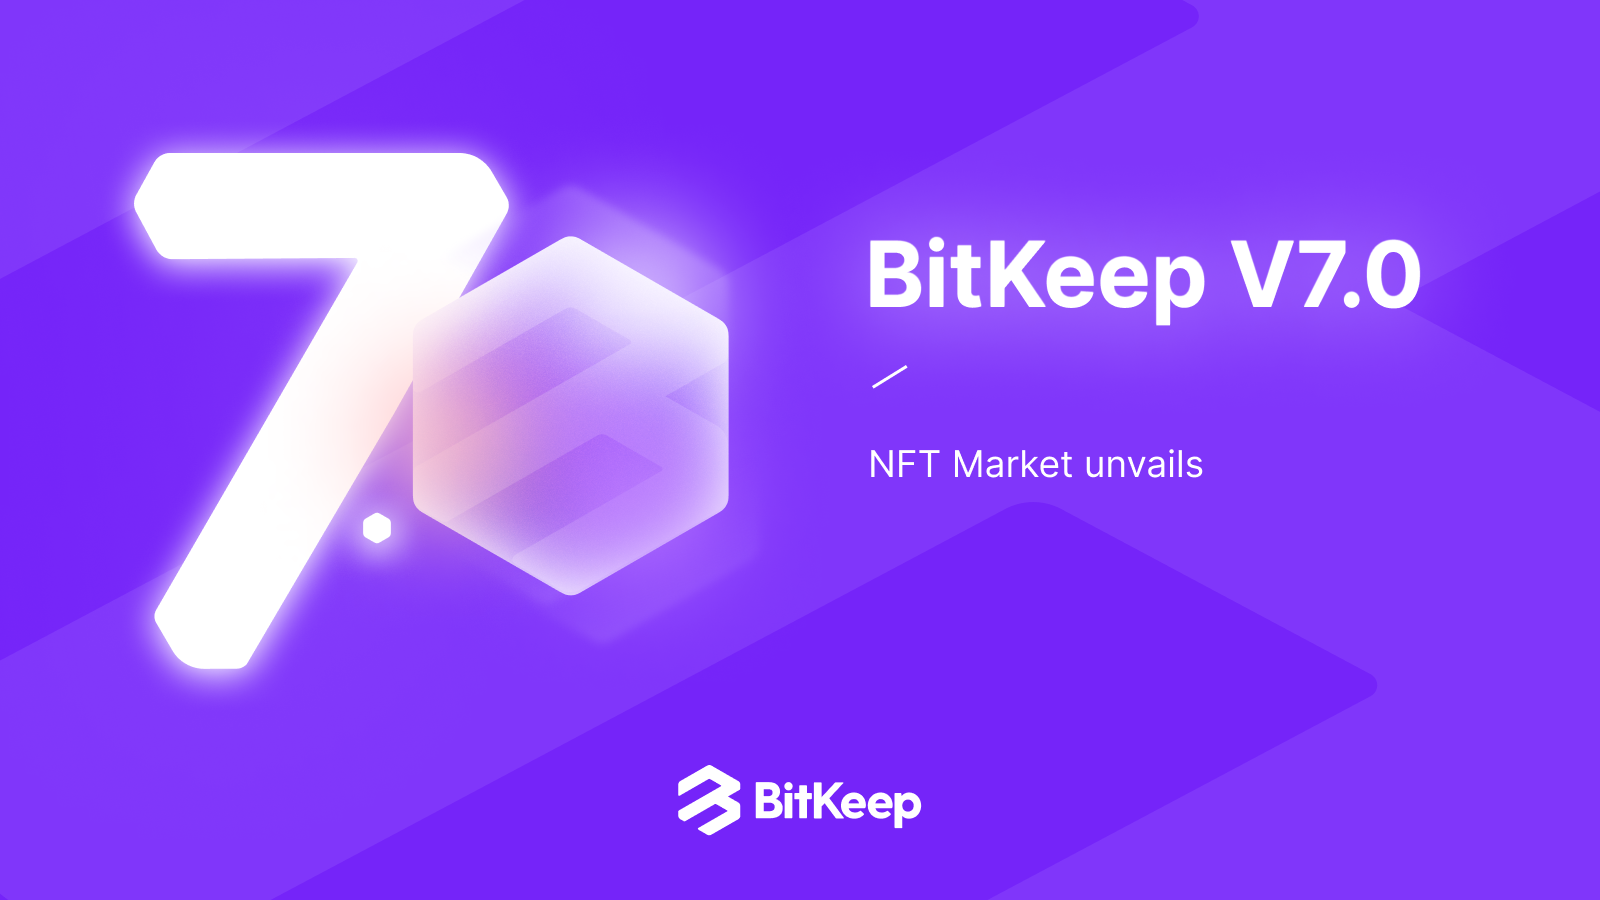 BitKeep V7.0 Comes With a New NFT Market thumbnail